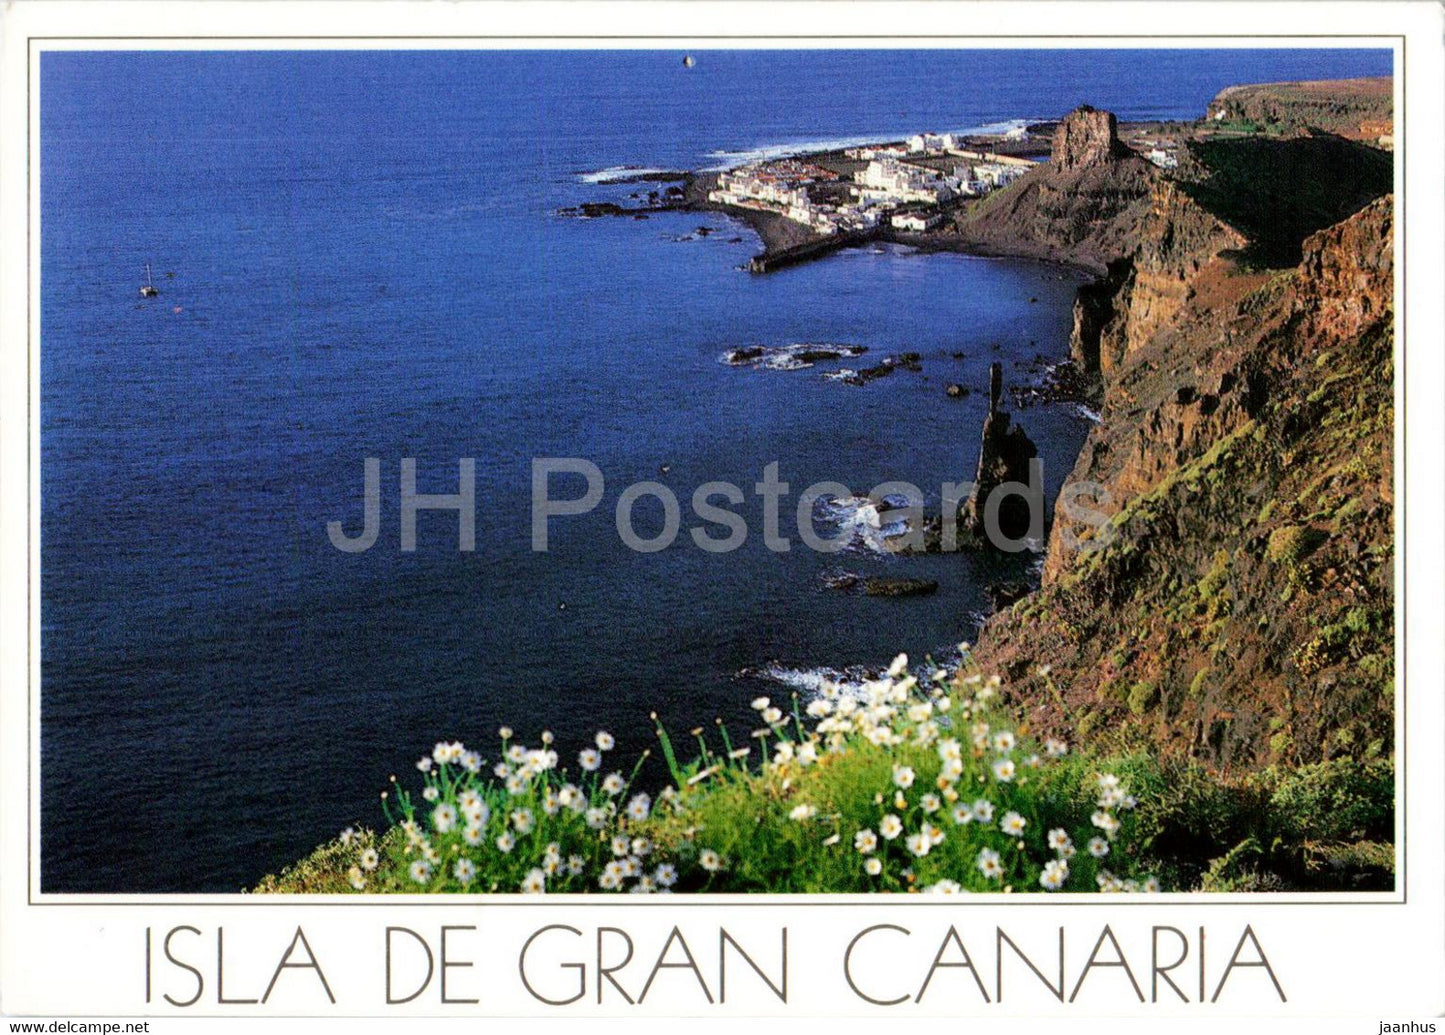 Isla de Gran Canaria - Agaete - 1992 - Spain - used - JH Postcards